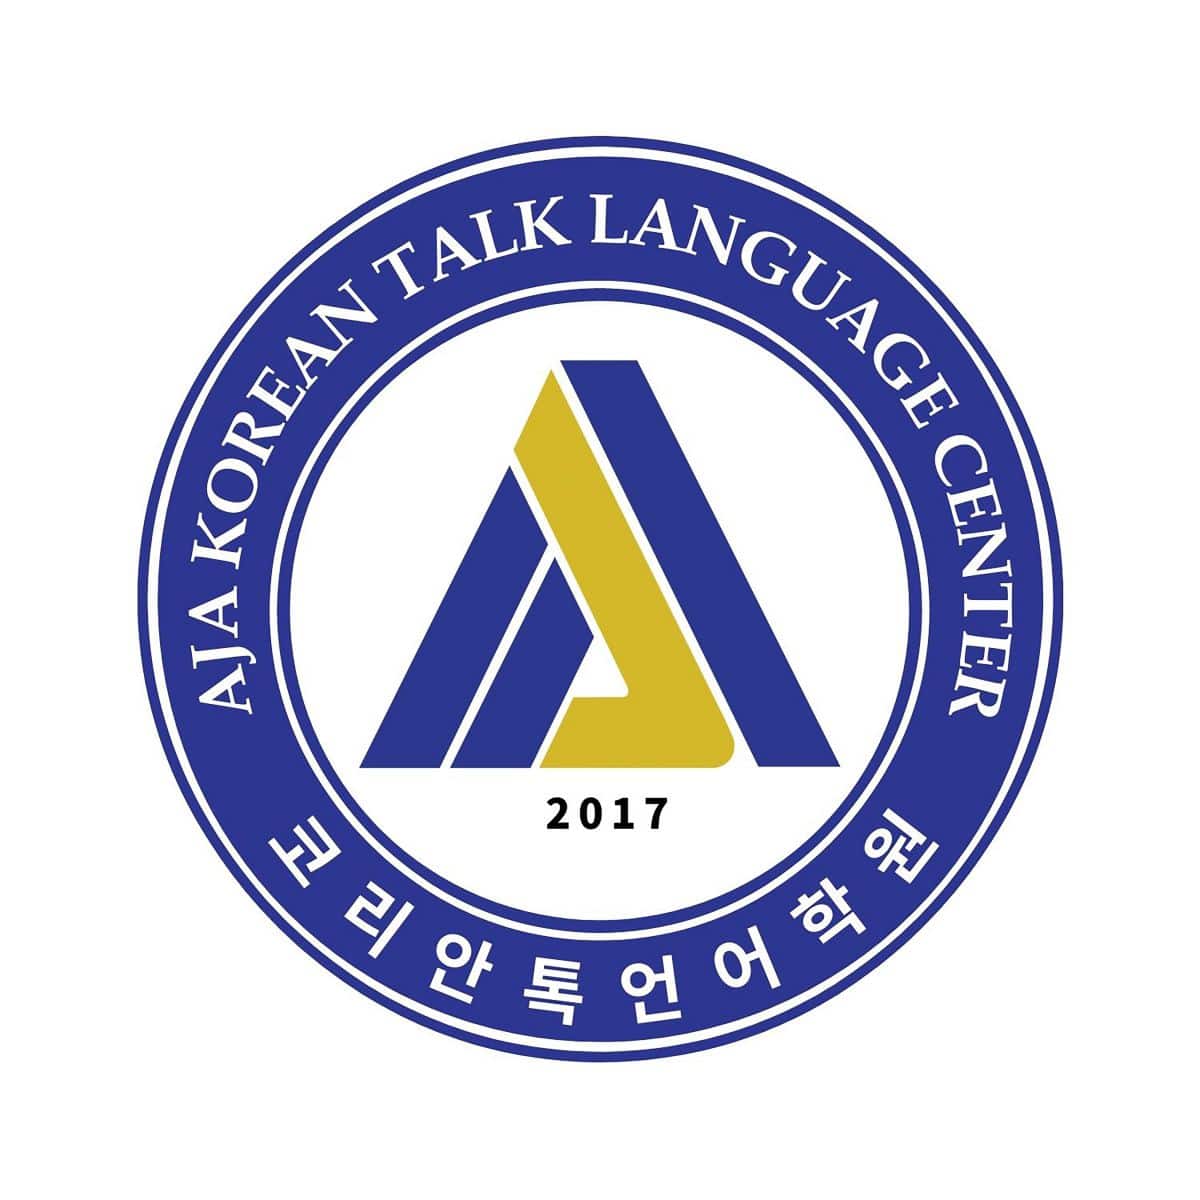 aja korean talk language center logo